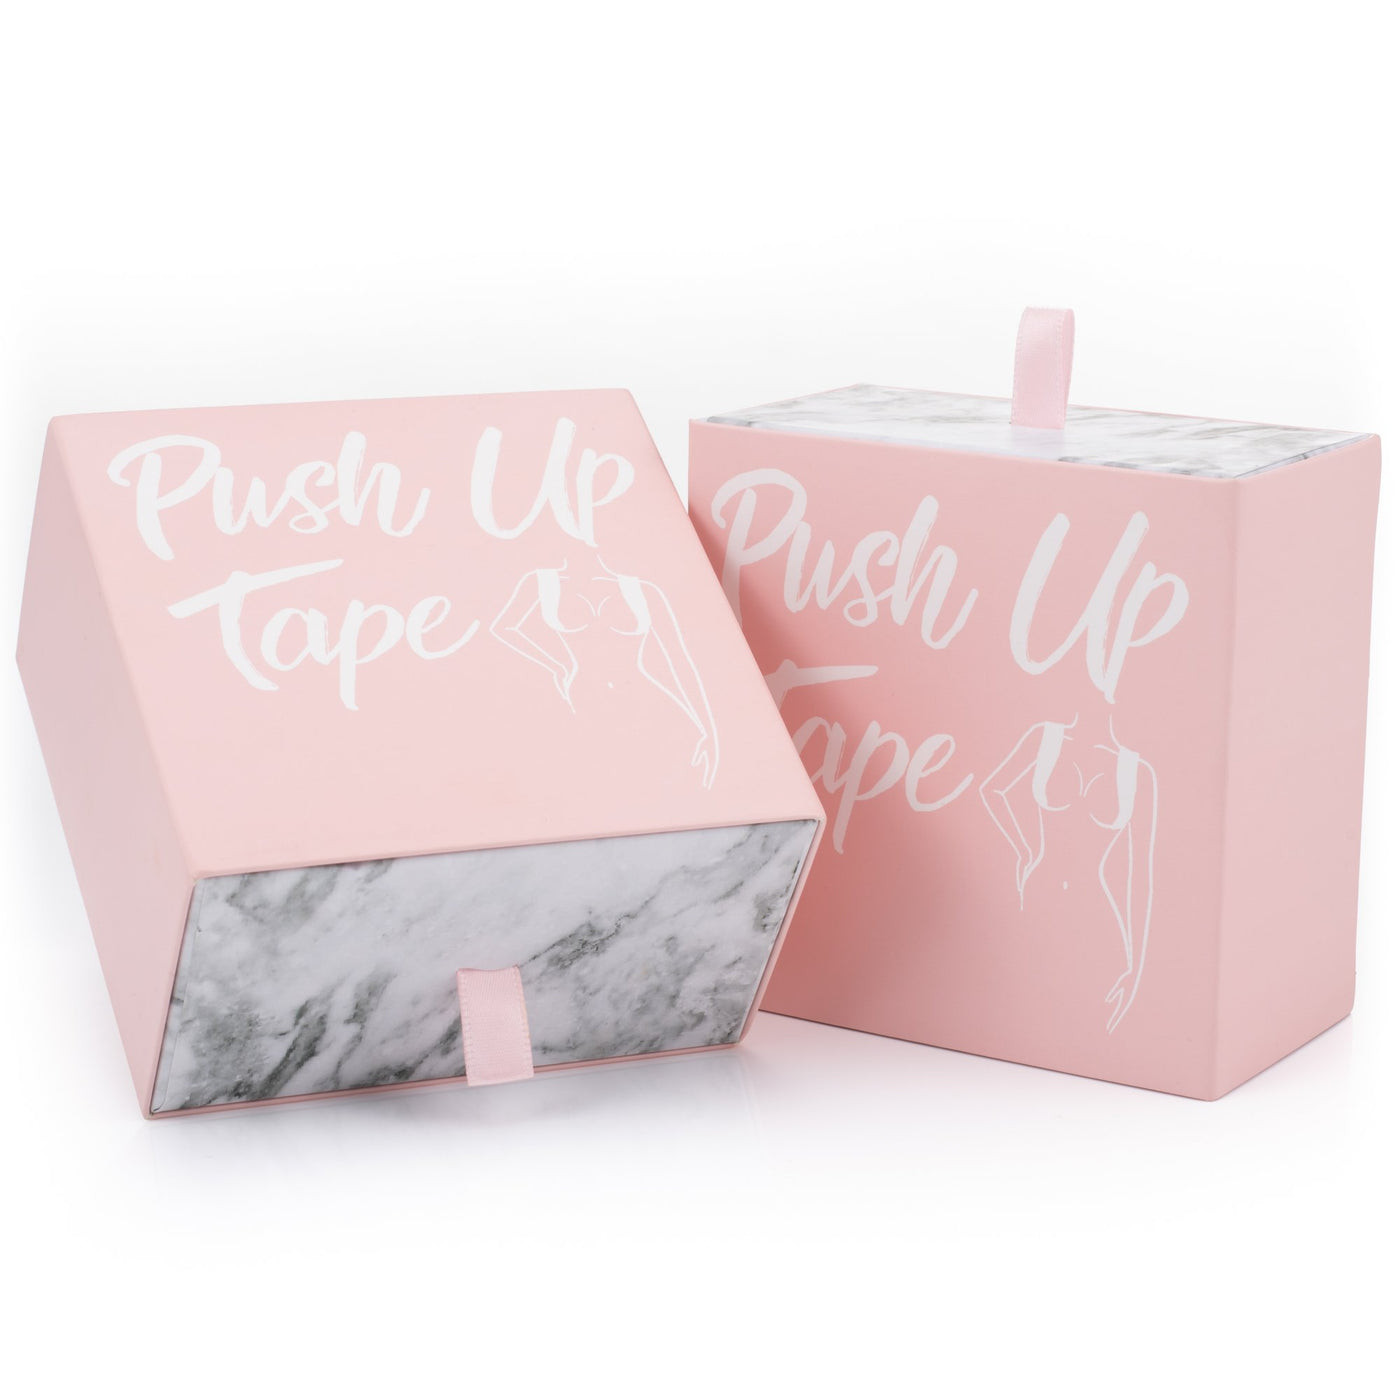 Push Up Tape - Sugar Almond – My Bare Essentials